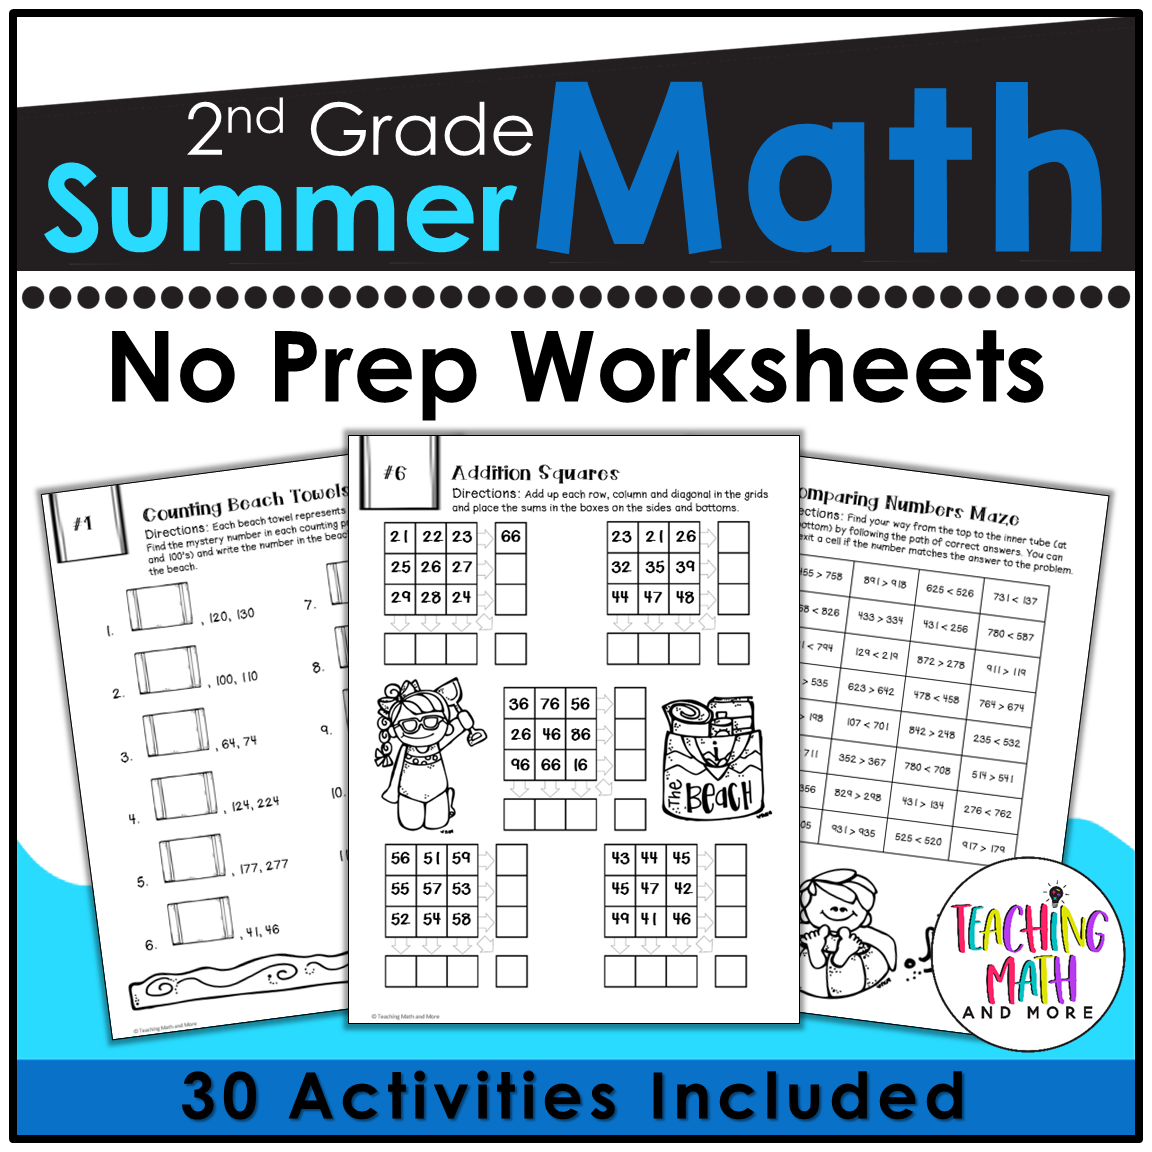 2nd-grade-summer-packet-teaching-math-and-more